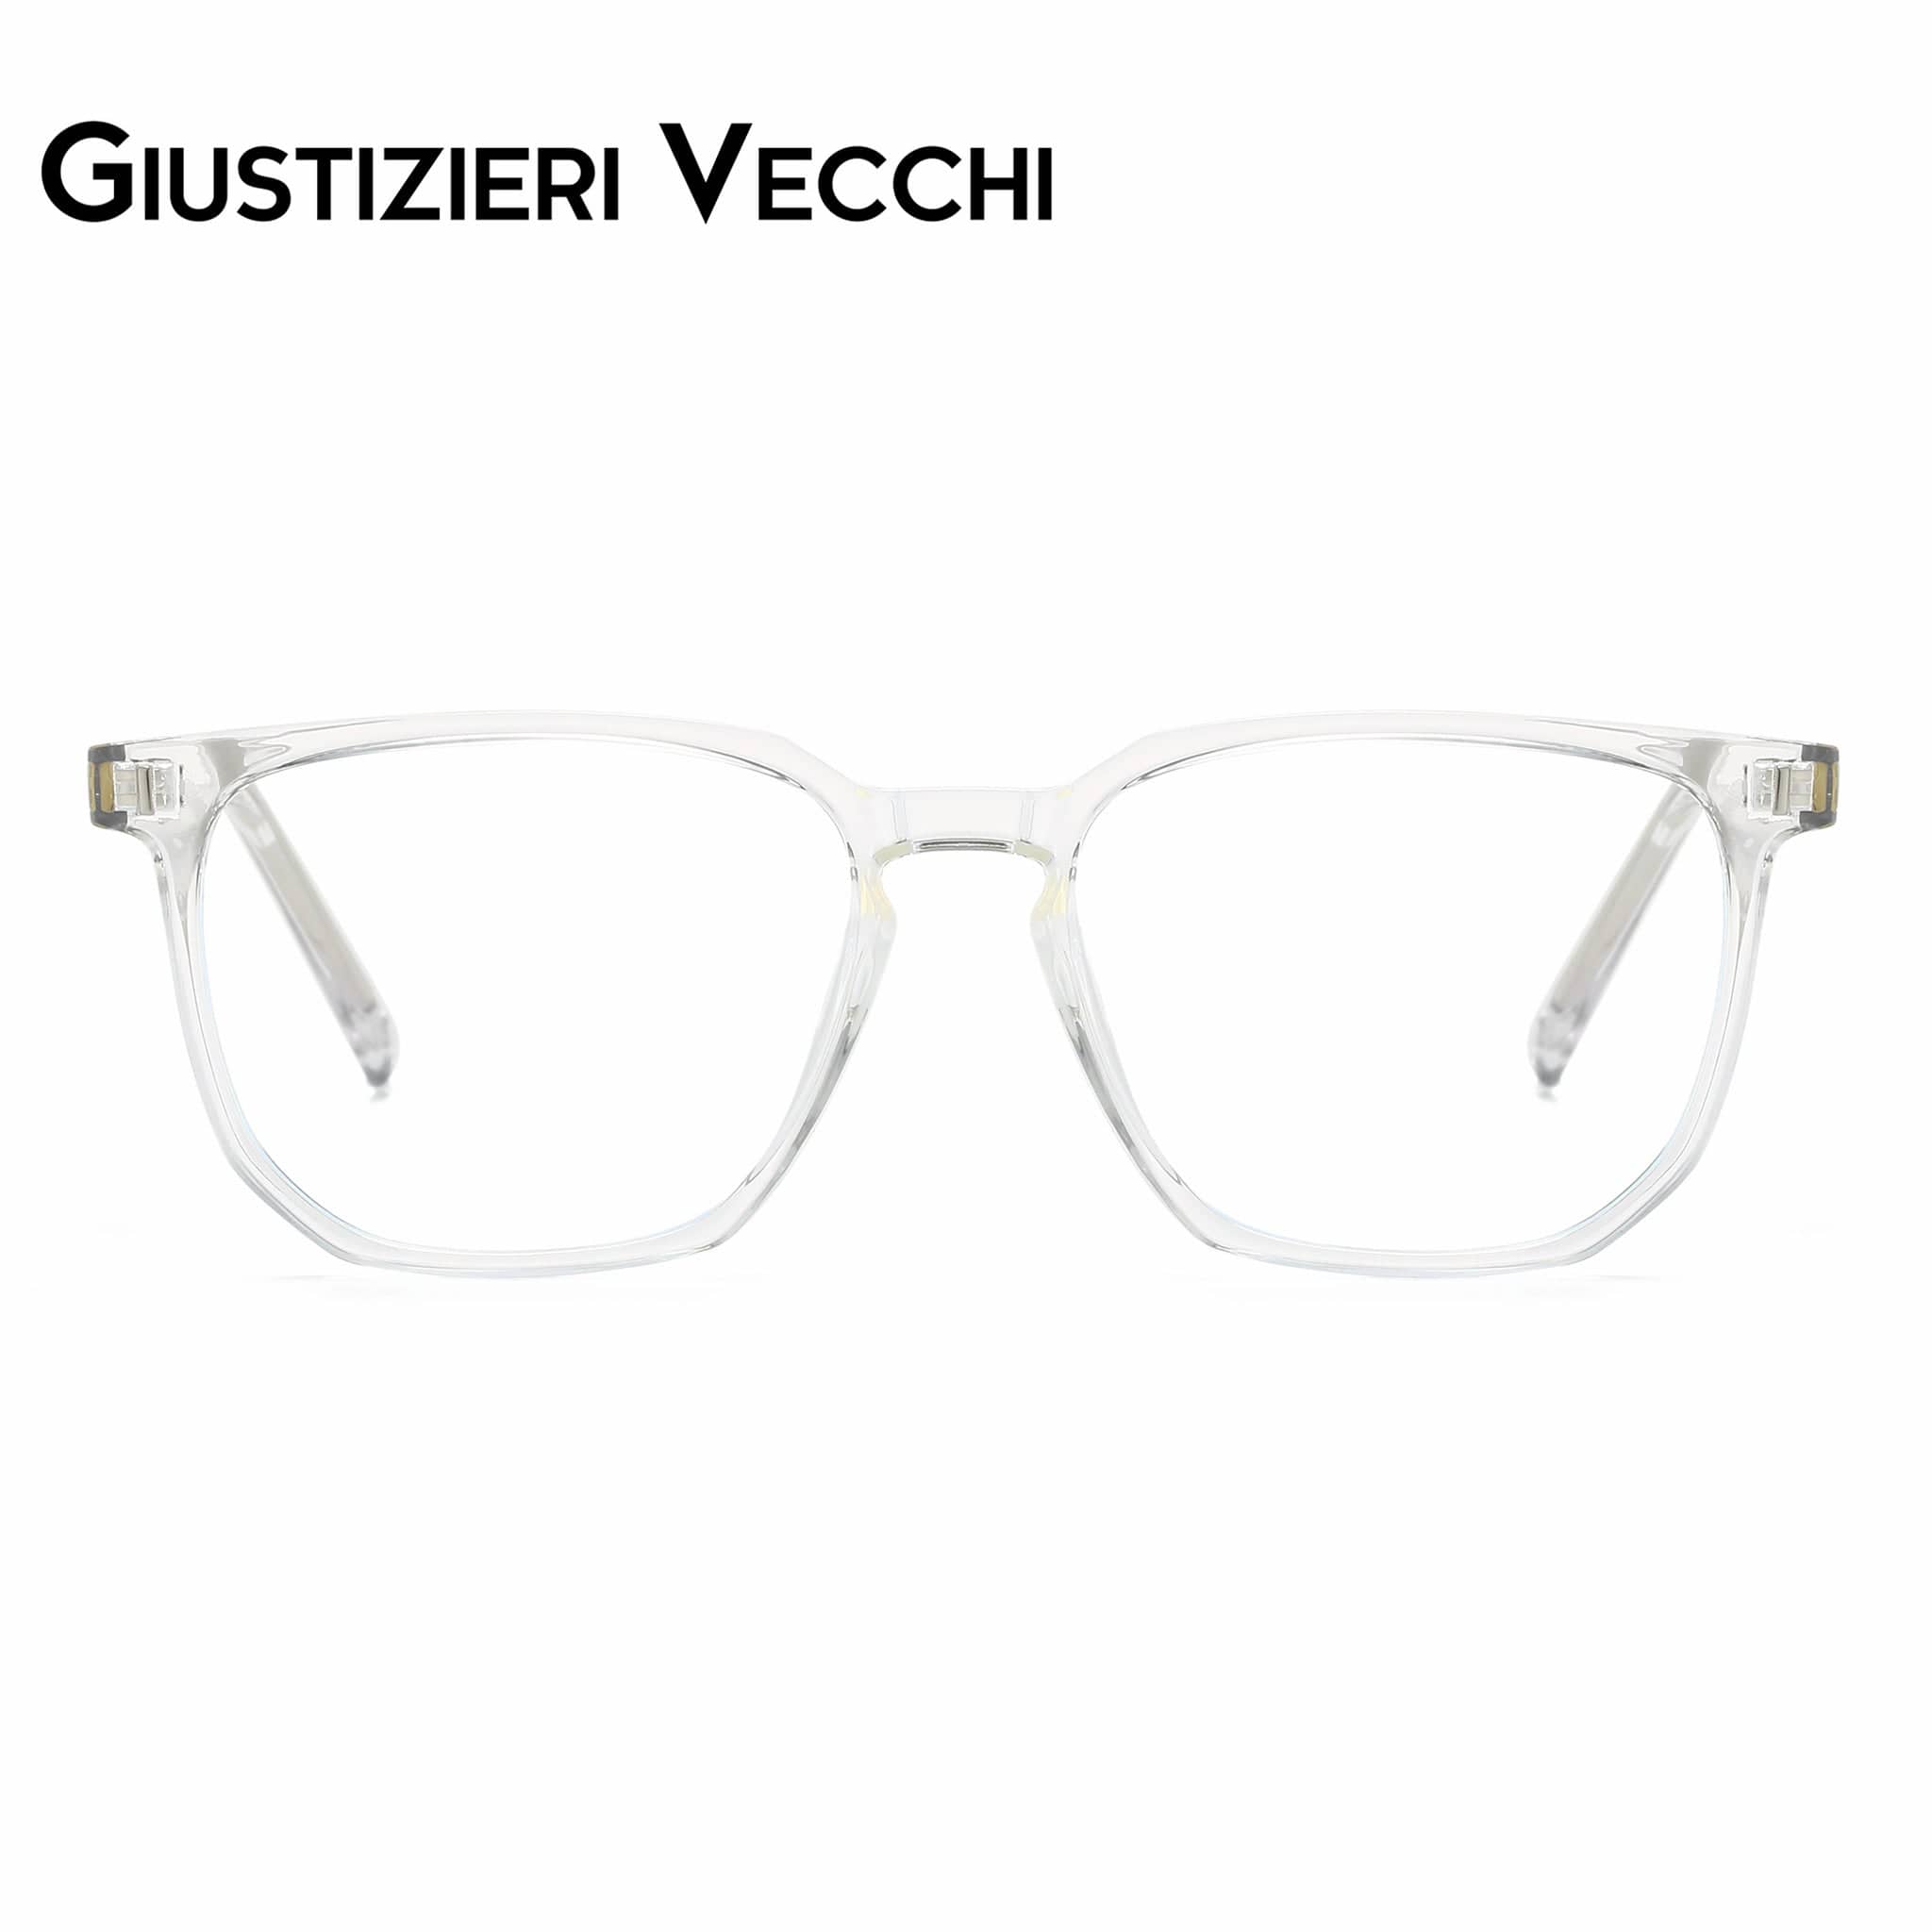 GIUSTIZIERI VECCHI Eyeglasses Medium / Clear Crystal CosmicSurf